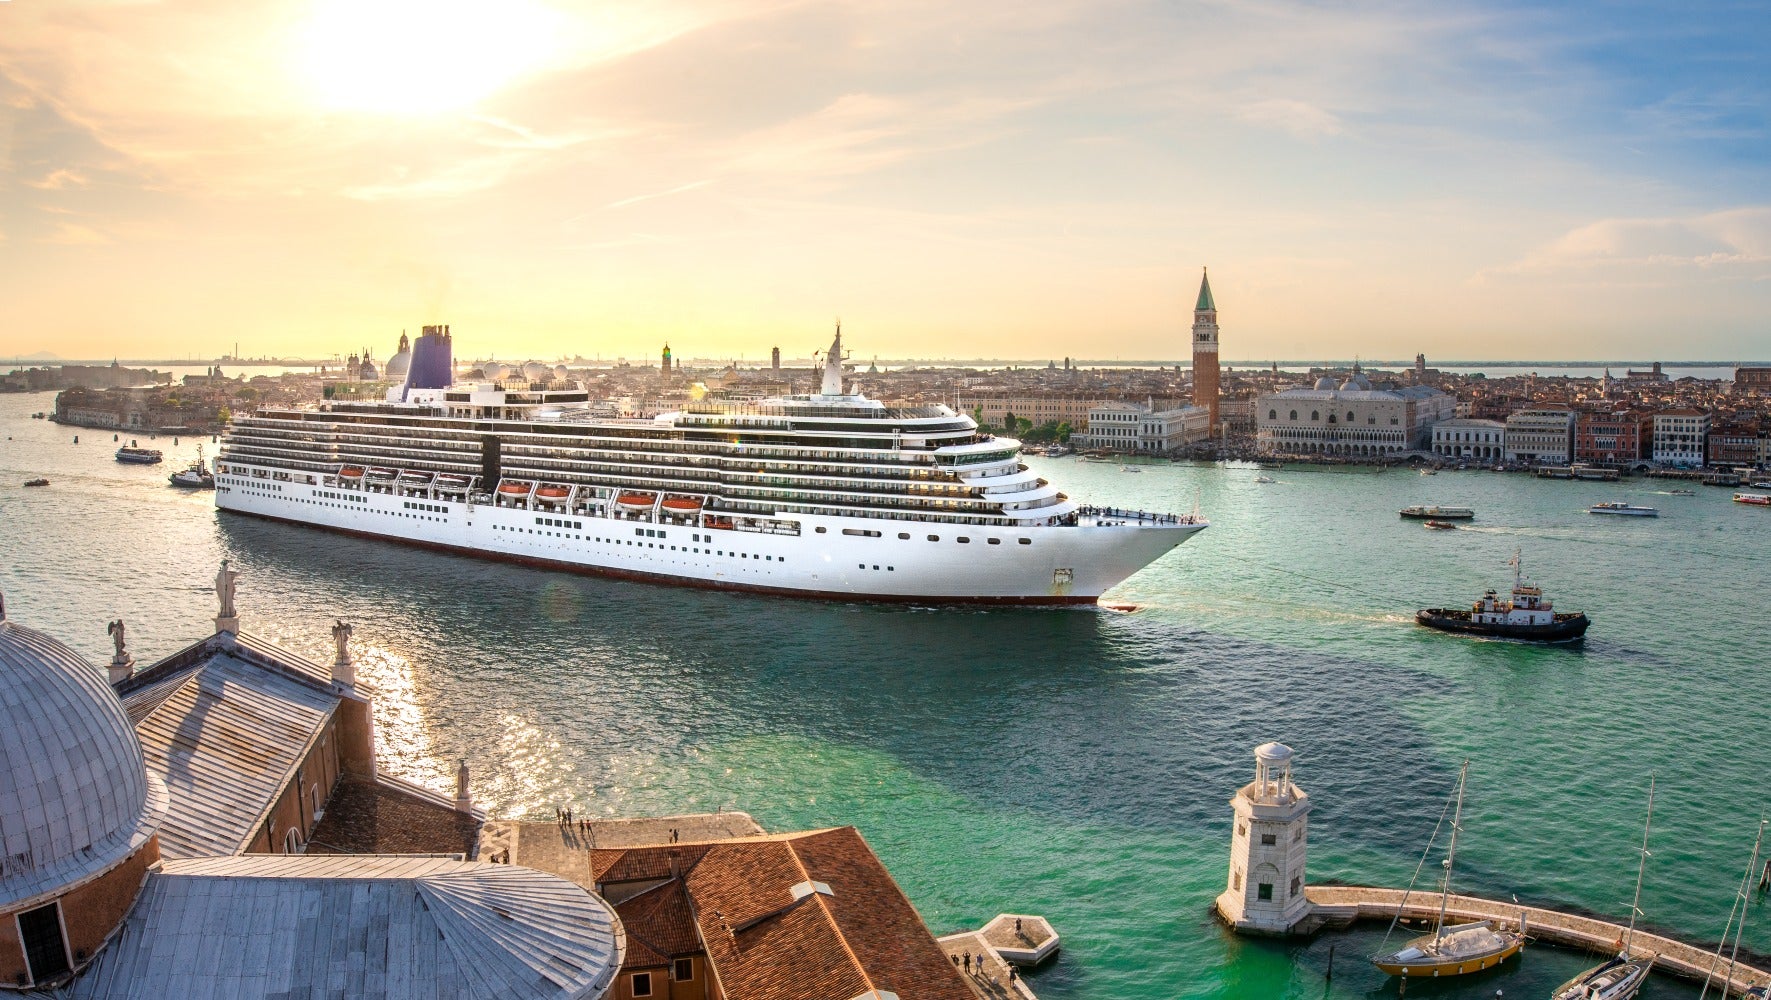 Venice's cruise ban